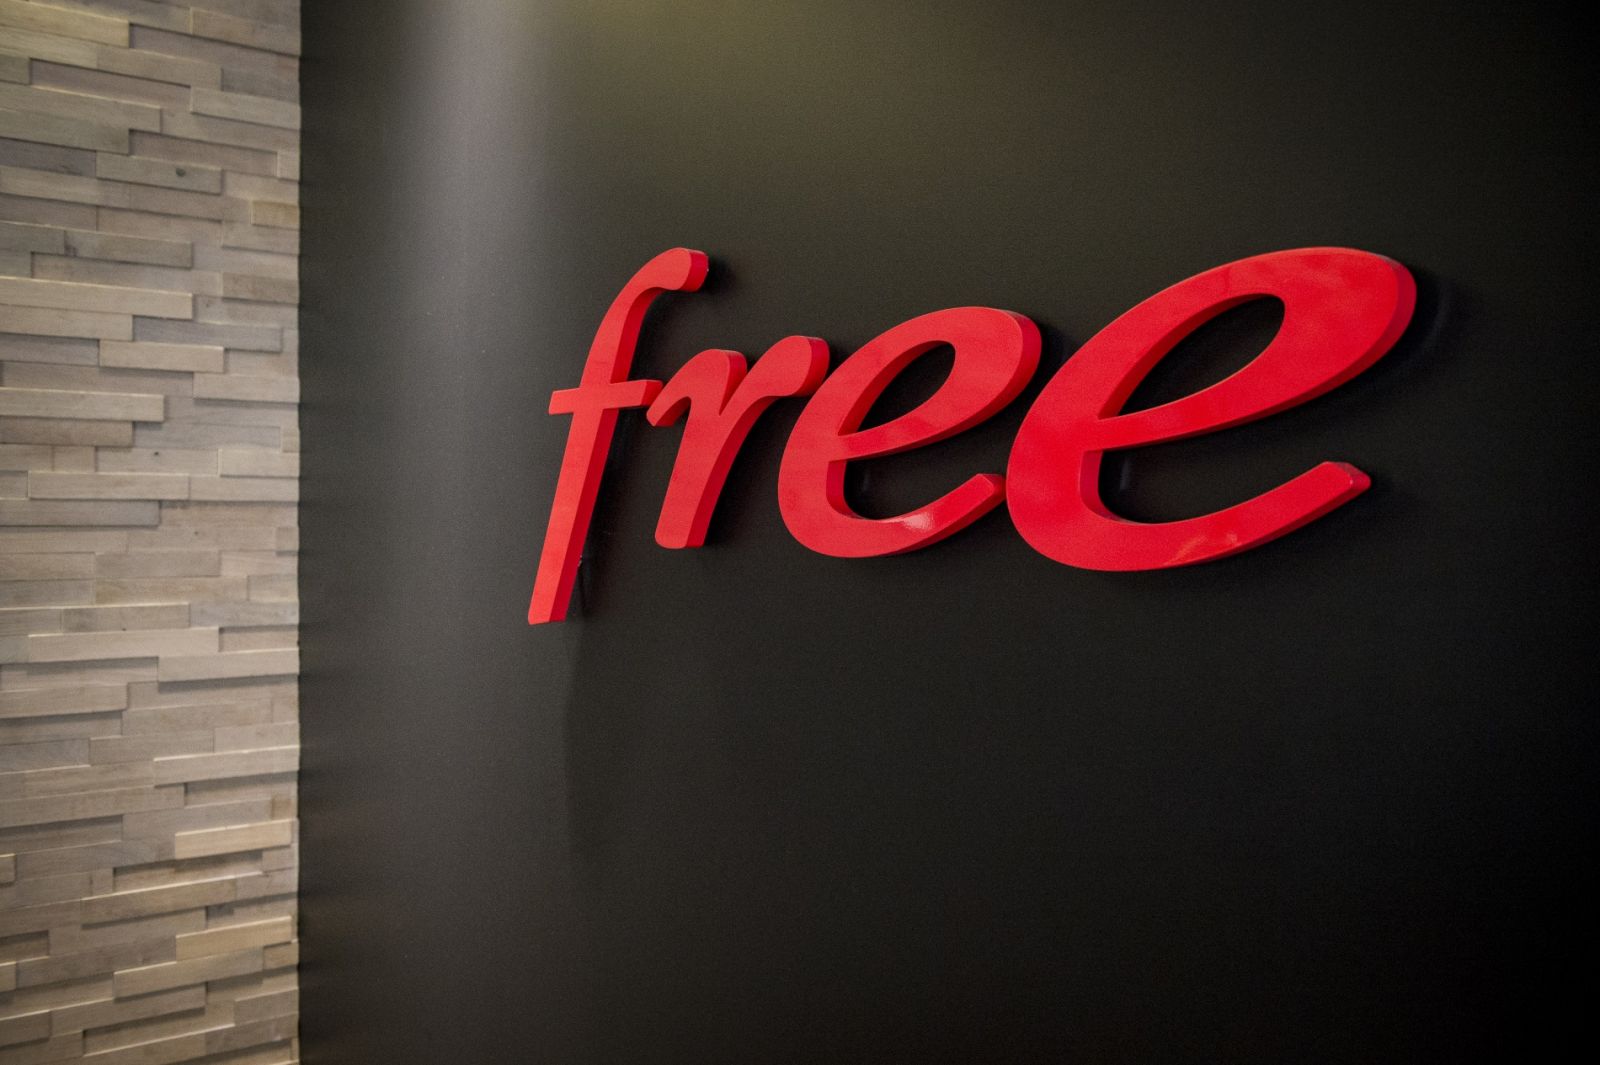 Free prolonge ses offres Free Mobile et Freebox !